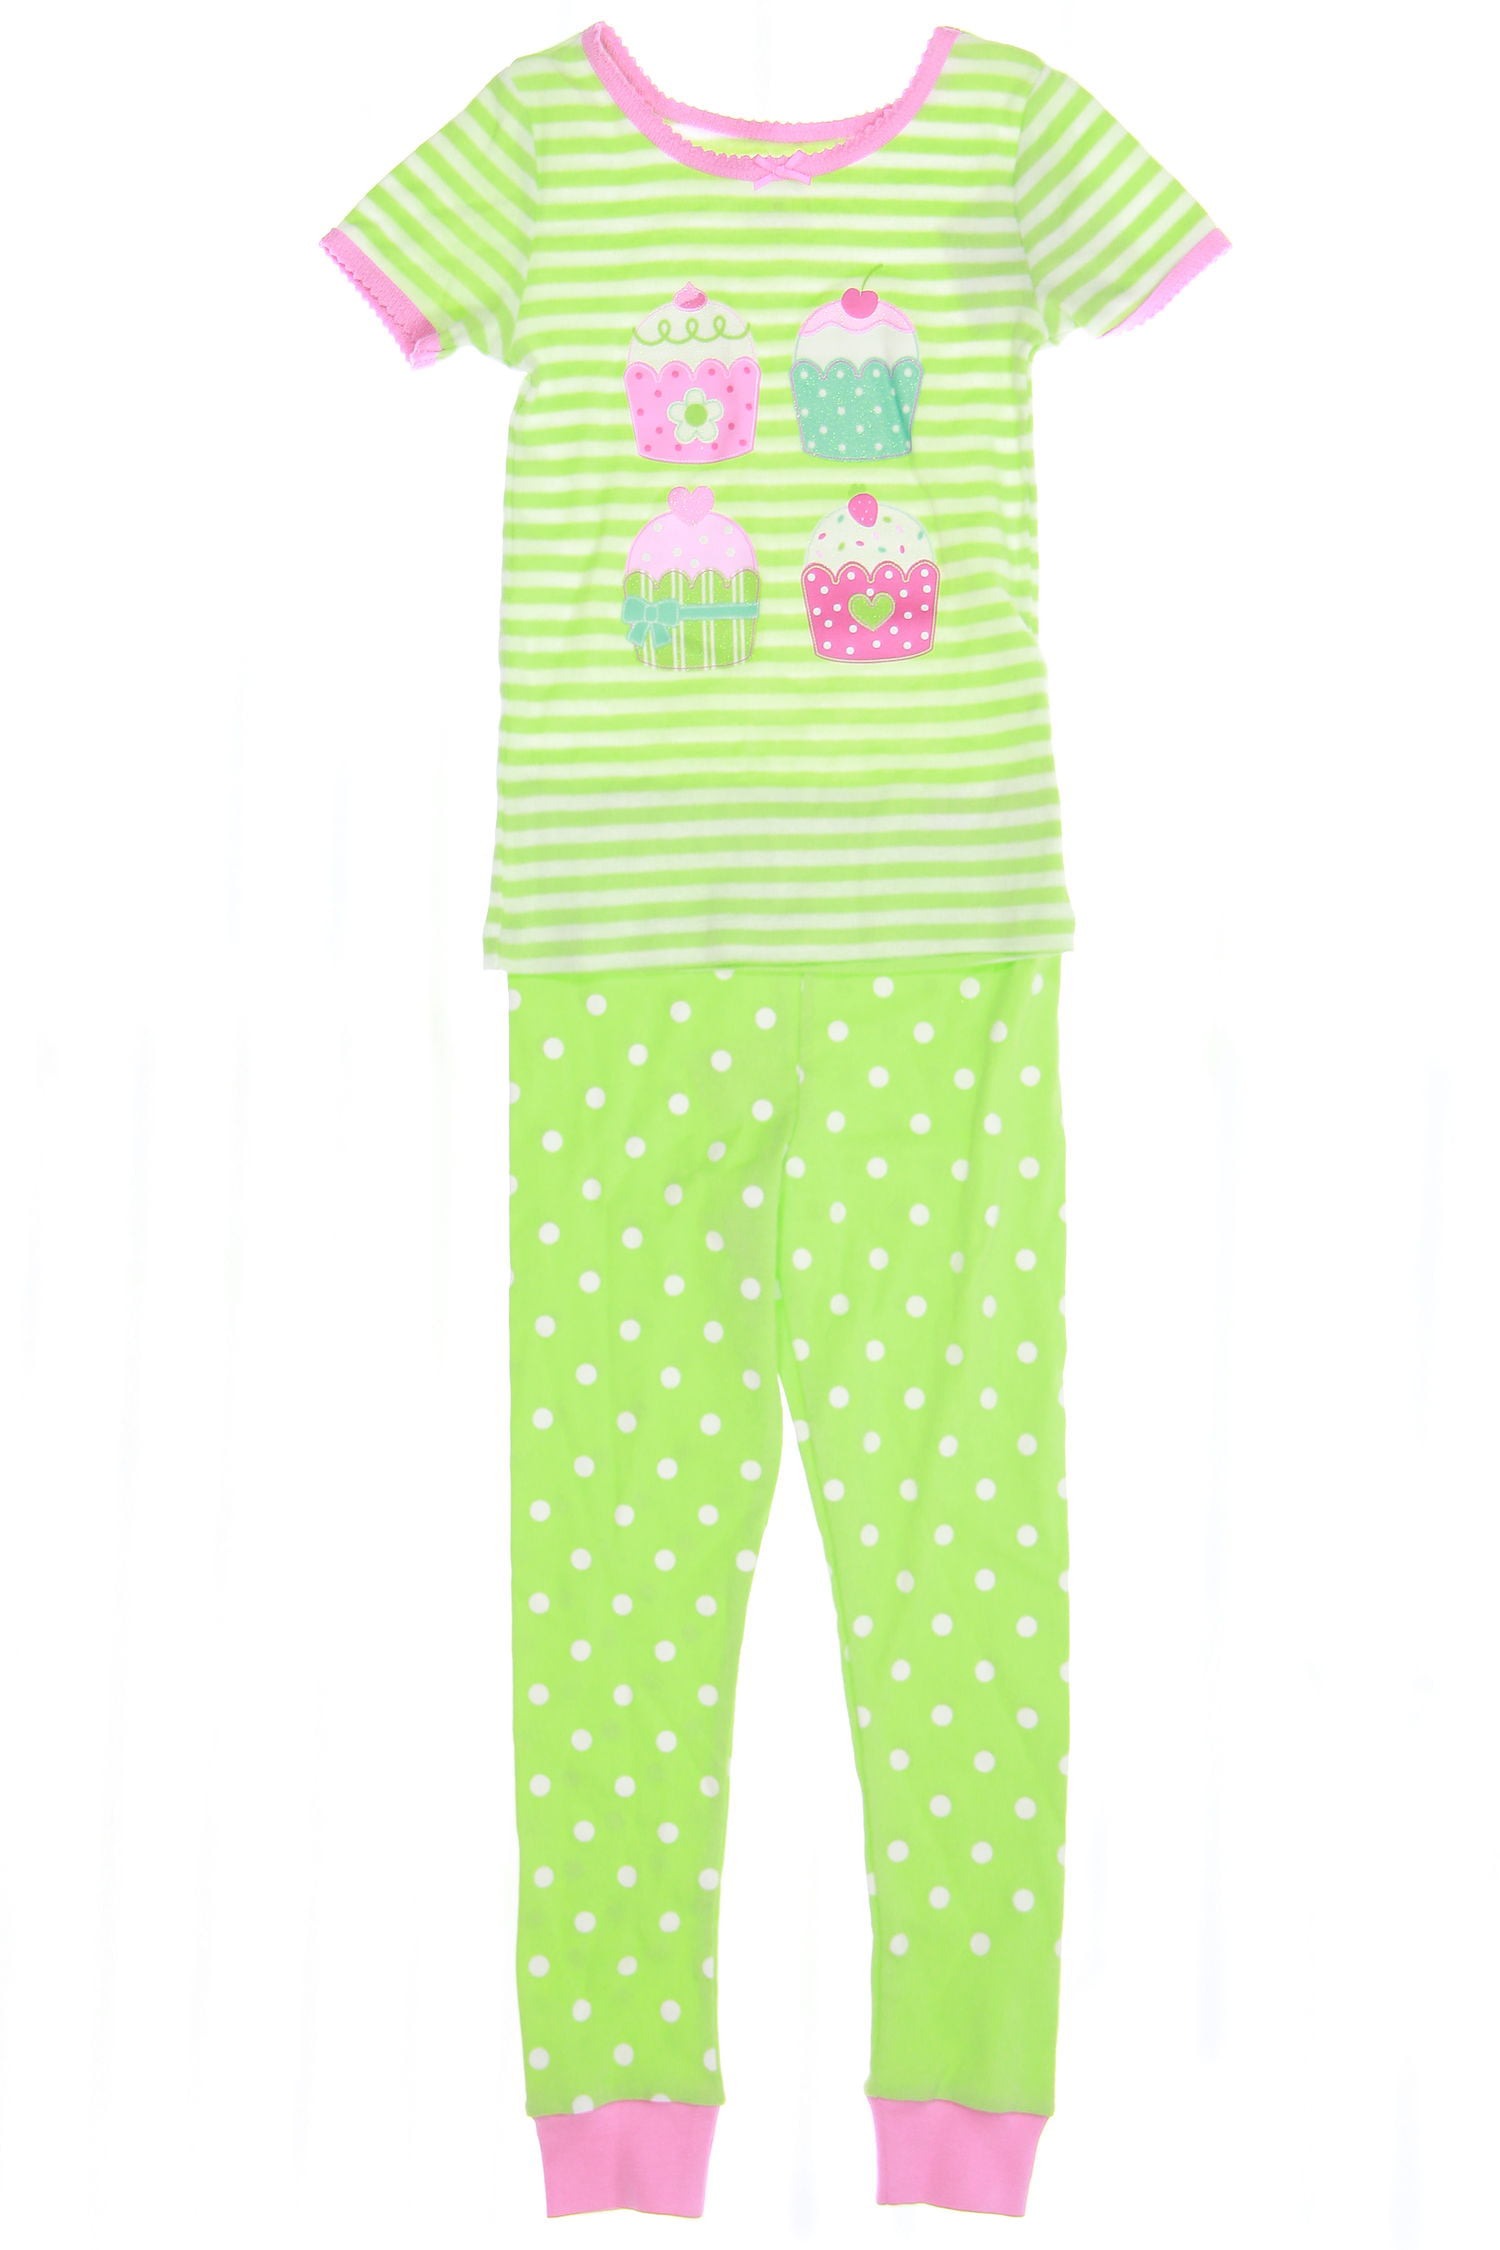 Little Me Girls 3T Pink Striped Frog Short-Sleeve Pajama Pants Set 